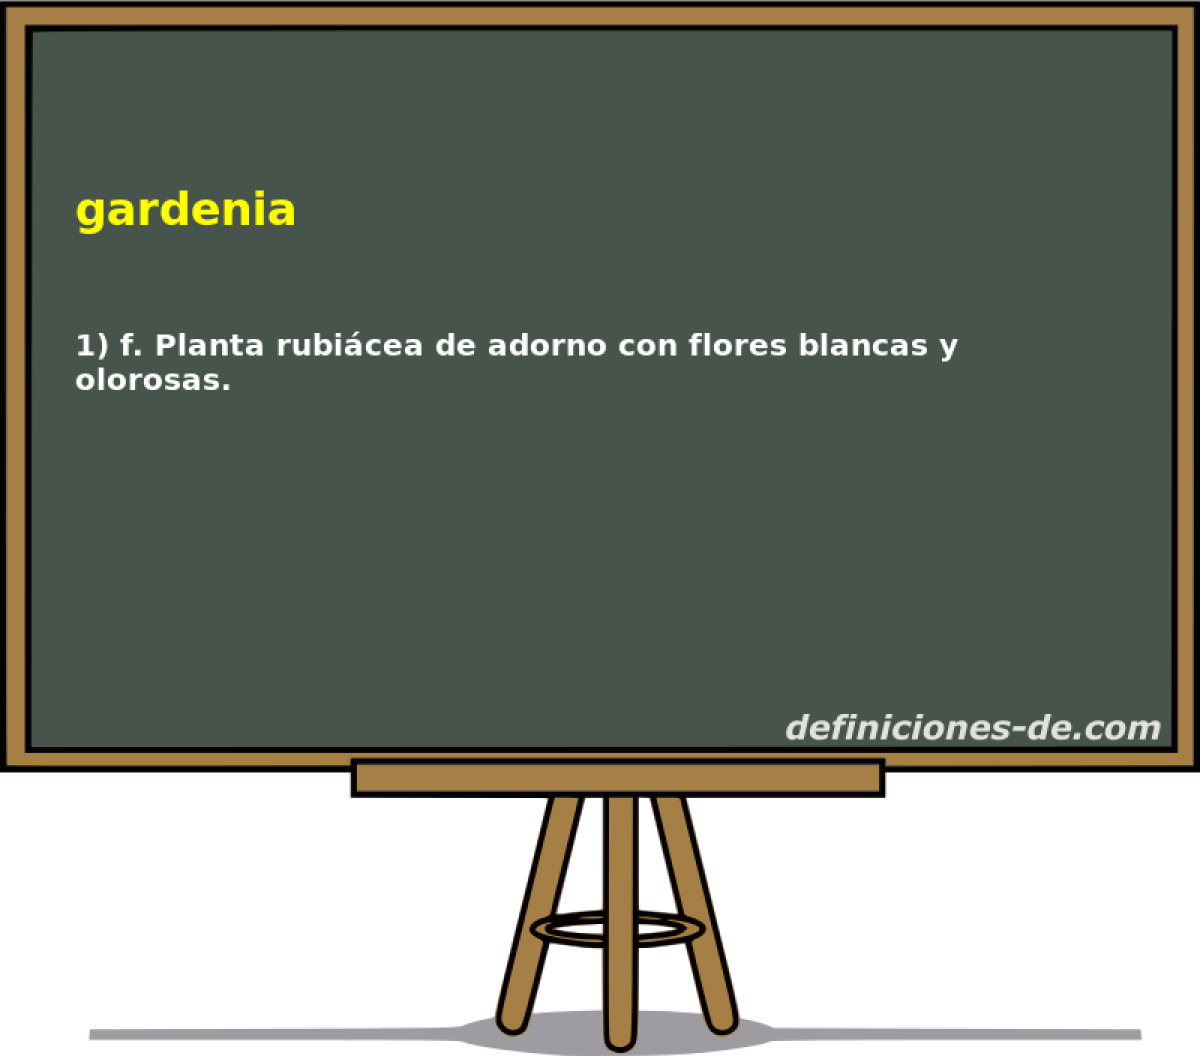 gardenia 